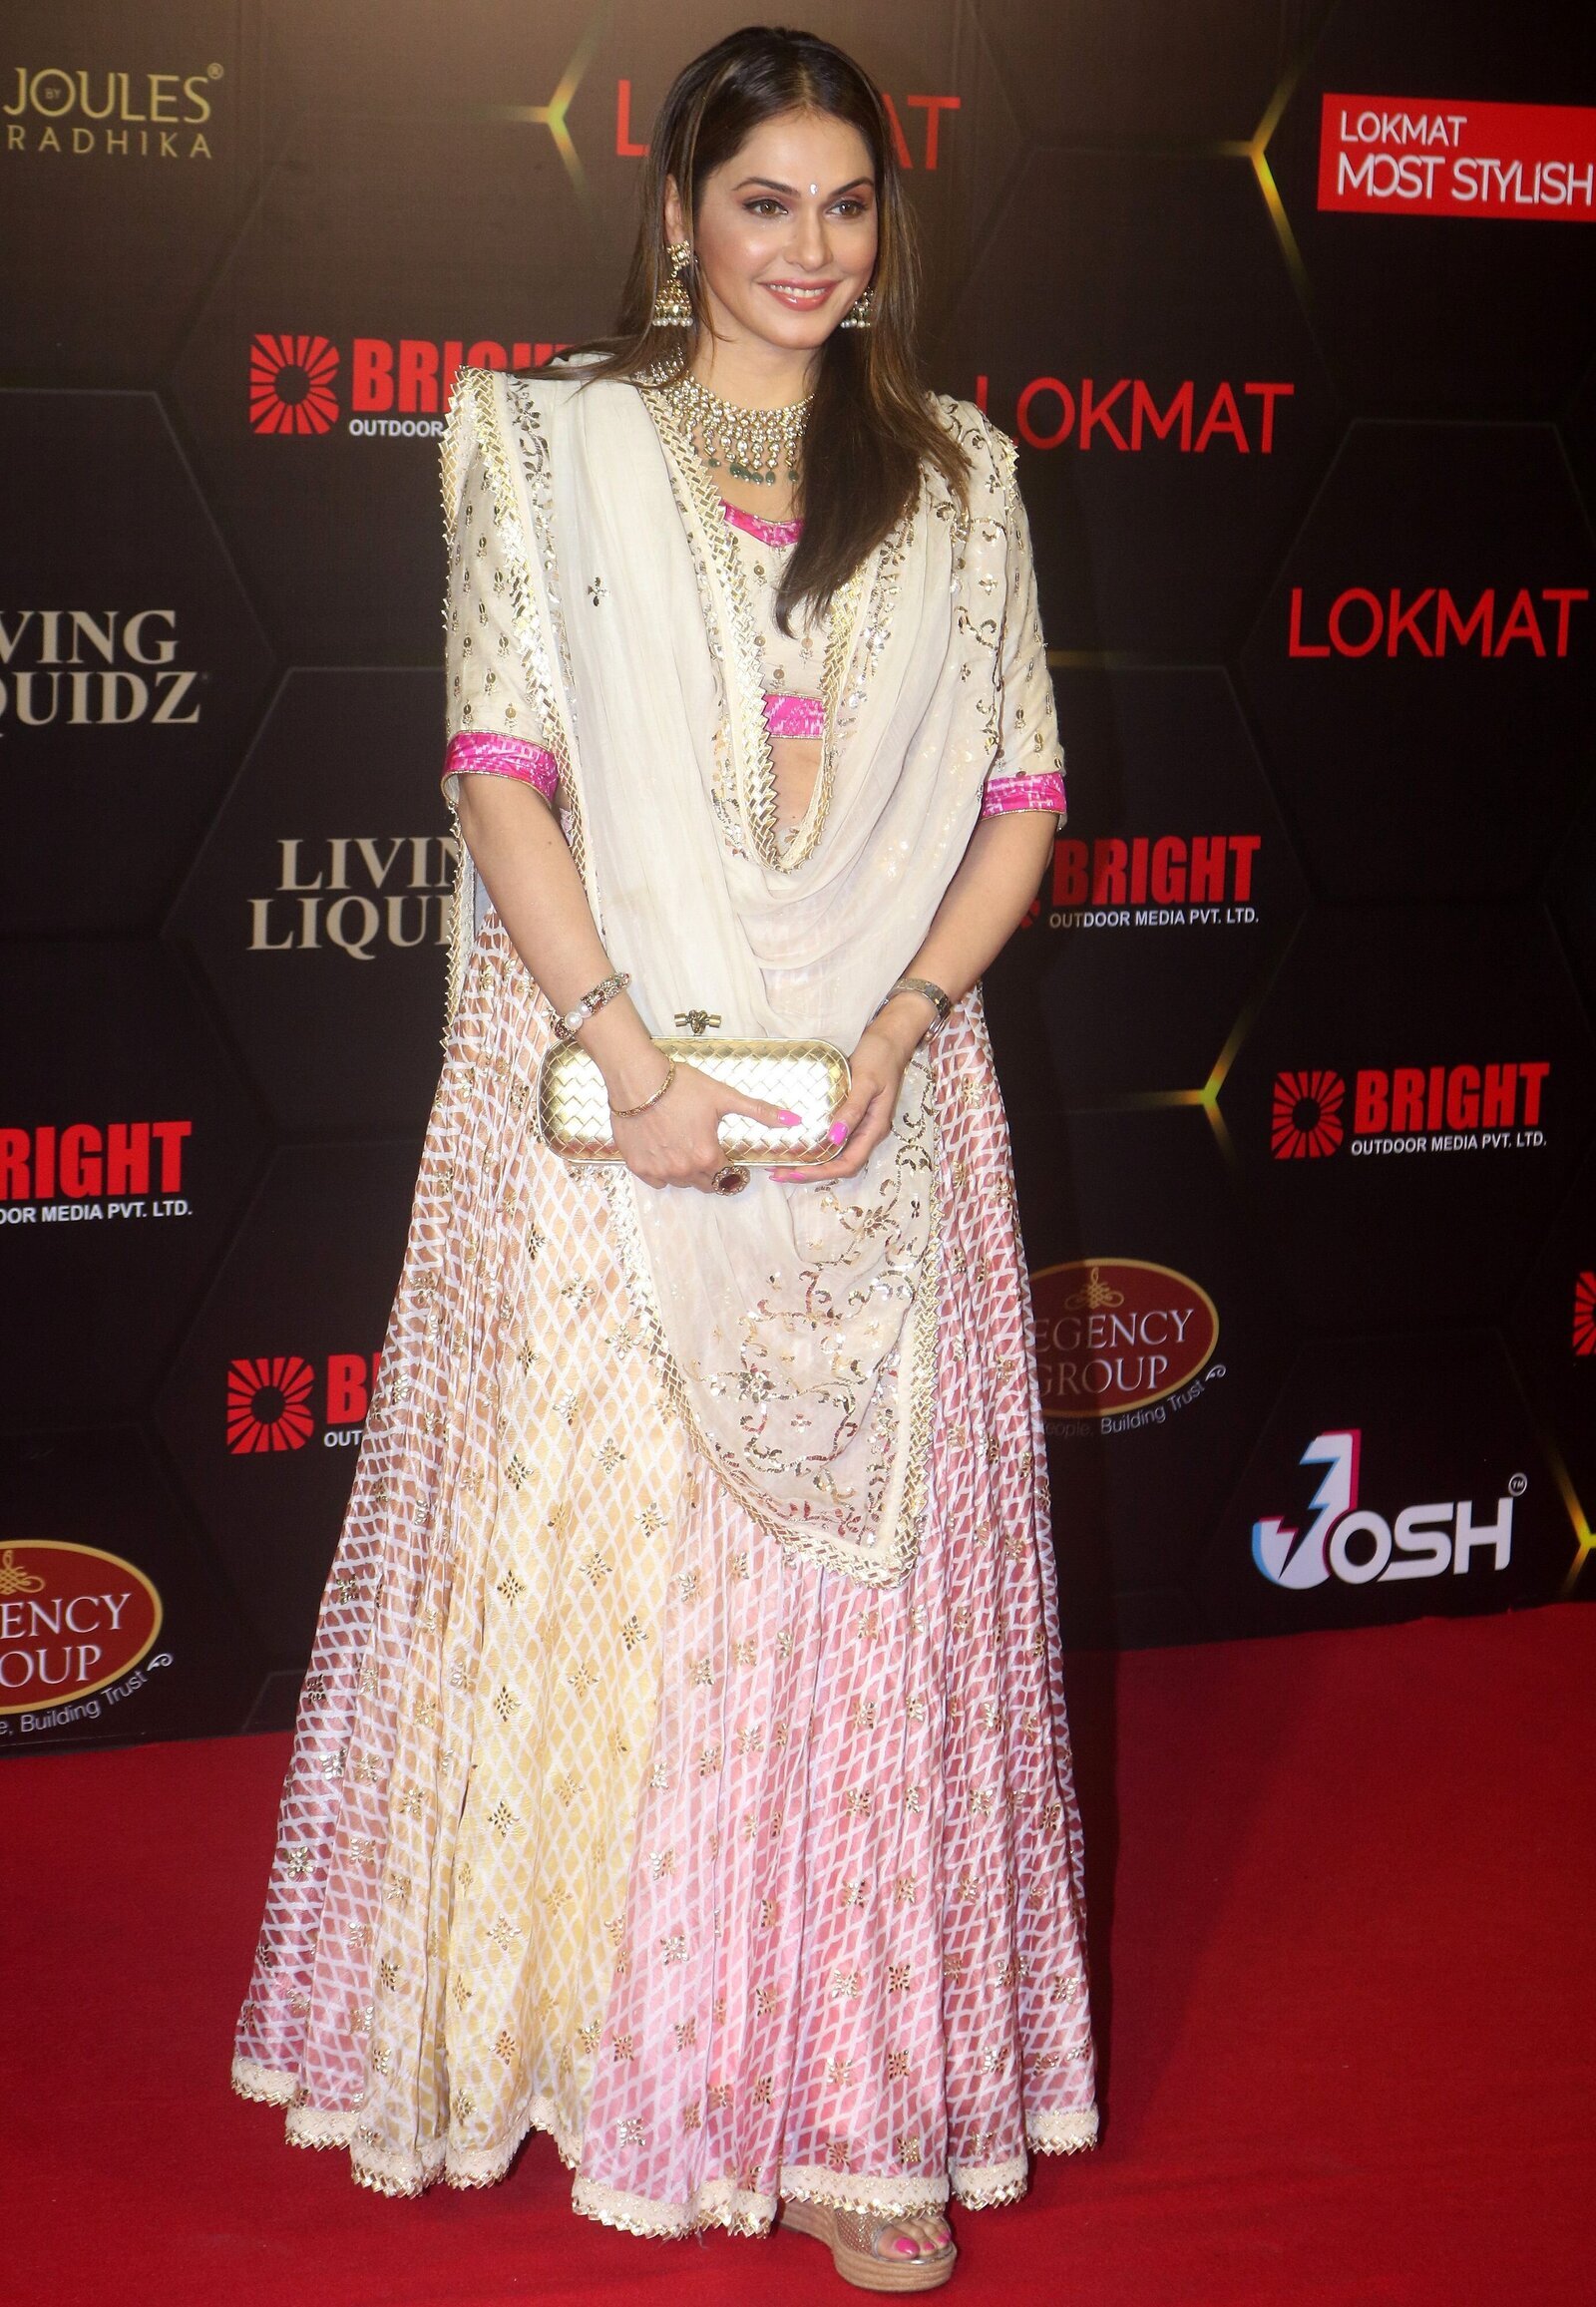 Isha Koppikar - Photos: Celebs At The Lokmat Most Stylish Awards 2021 | Picture 1845777